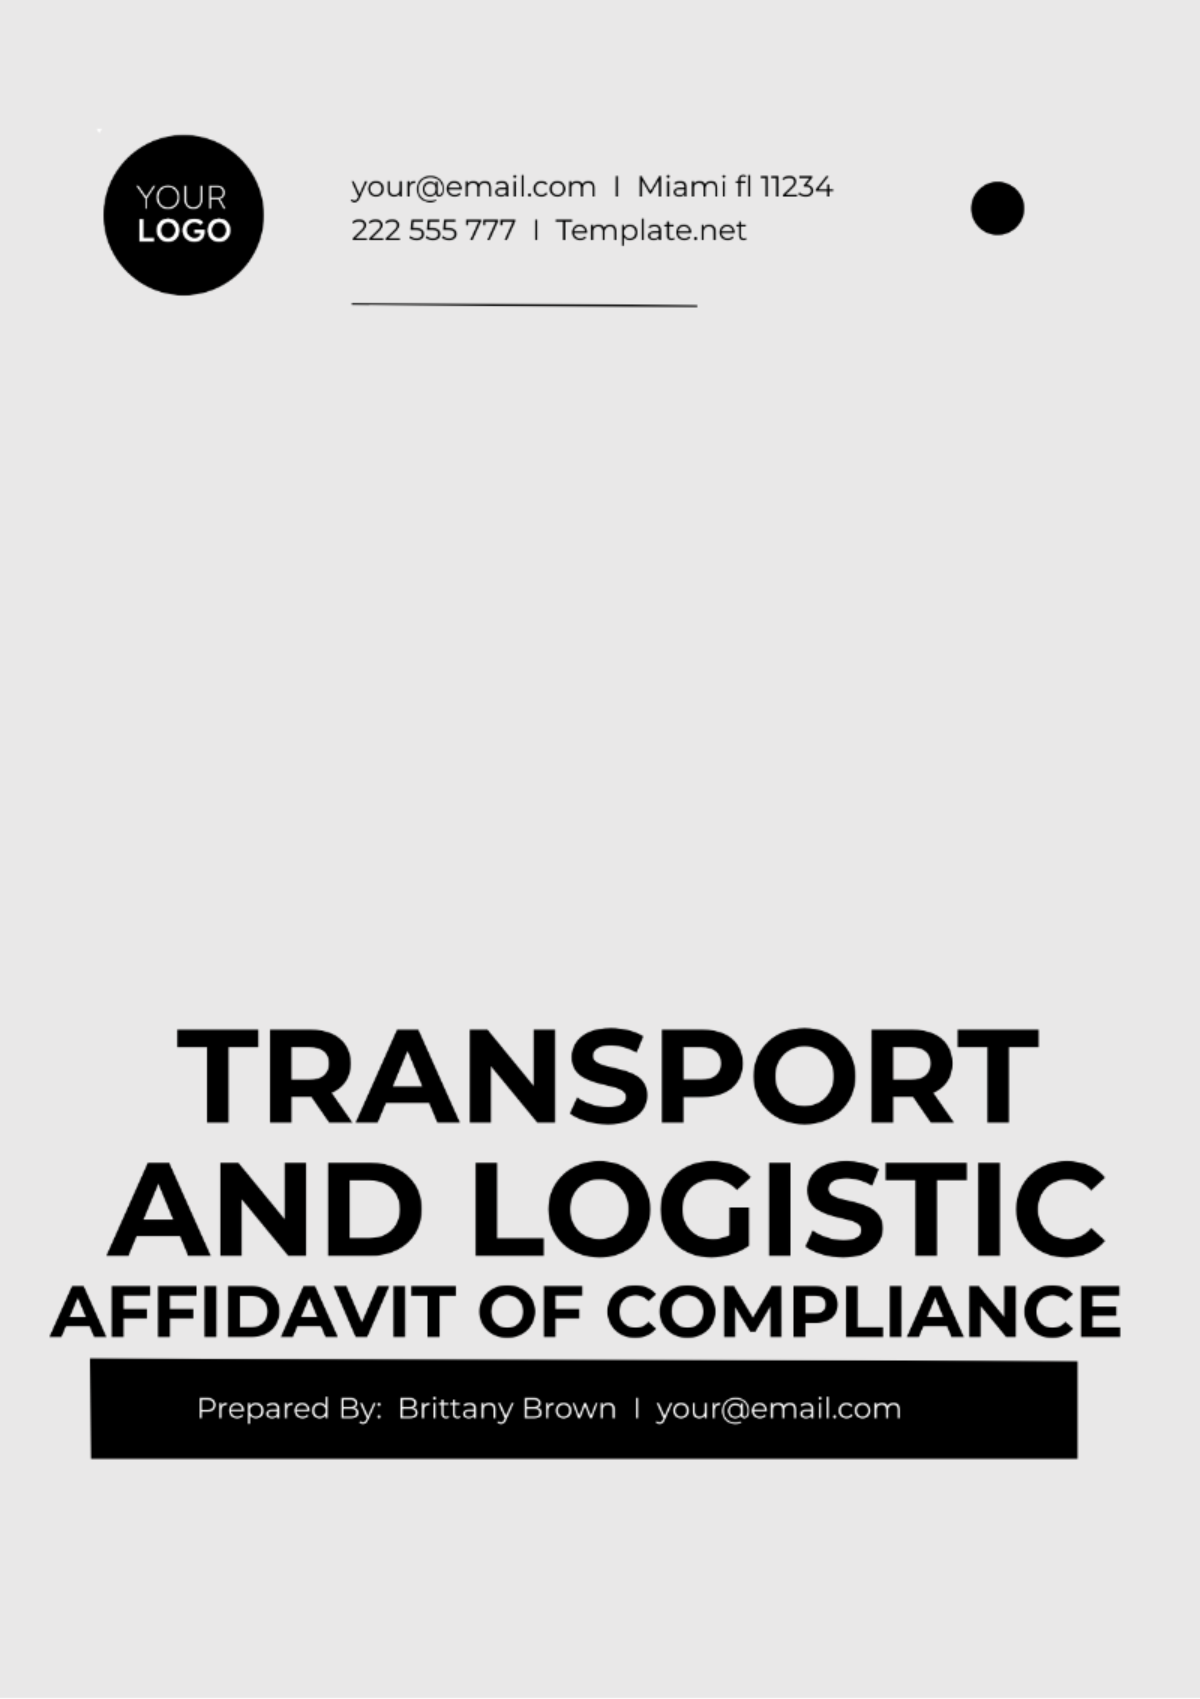 Free Transport And Logistics Affidavit Of Compliance Template